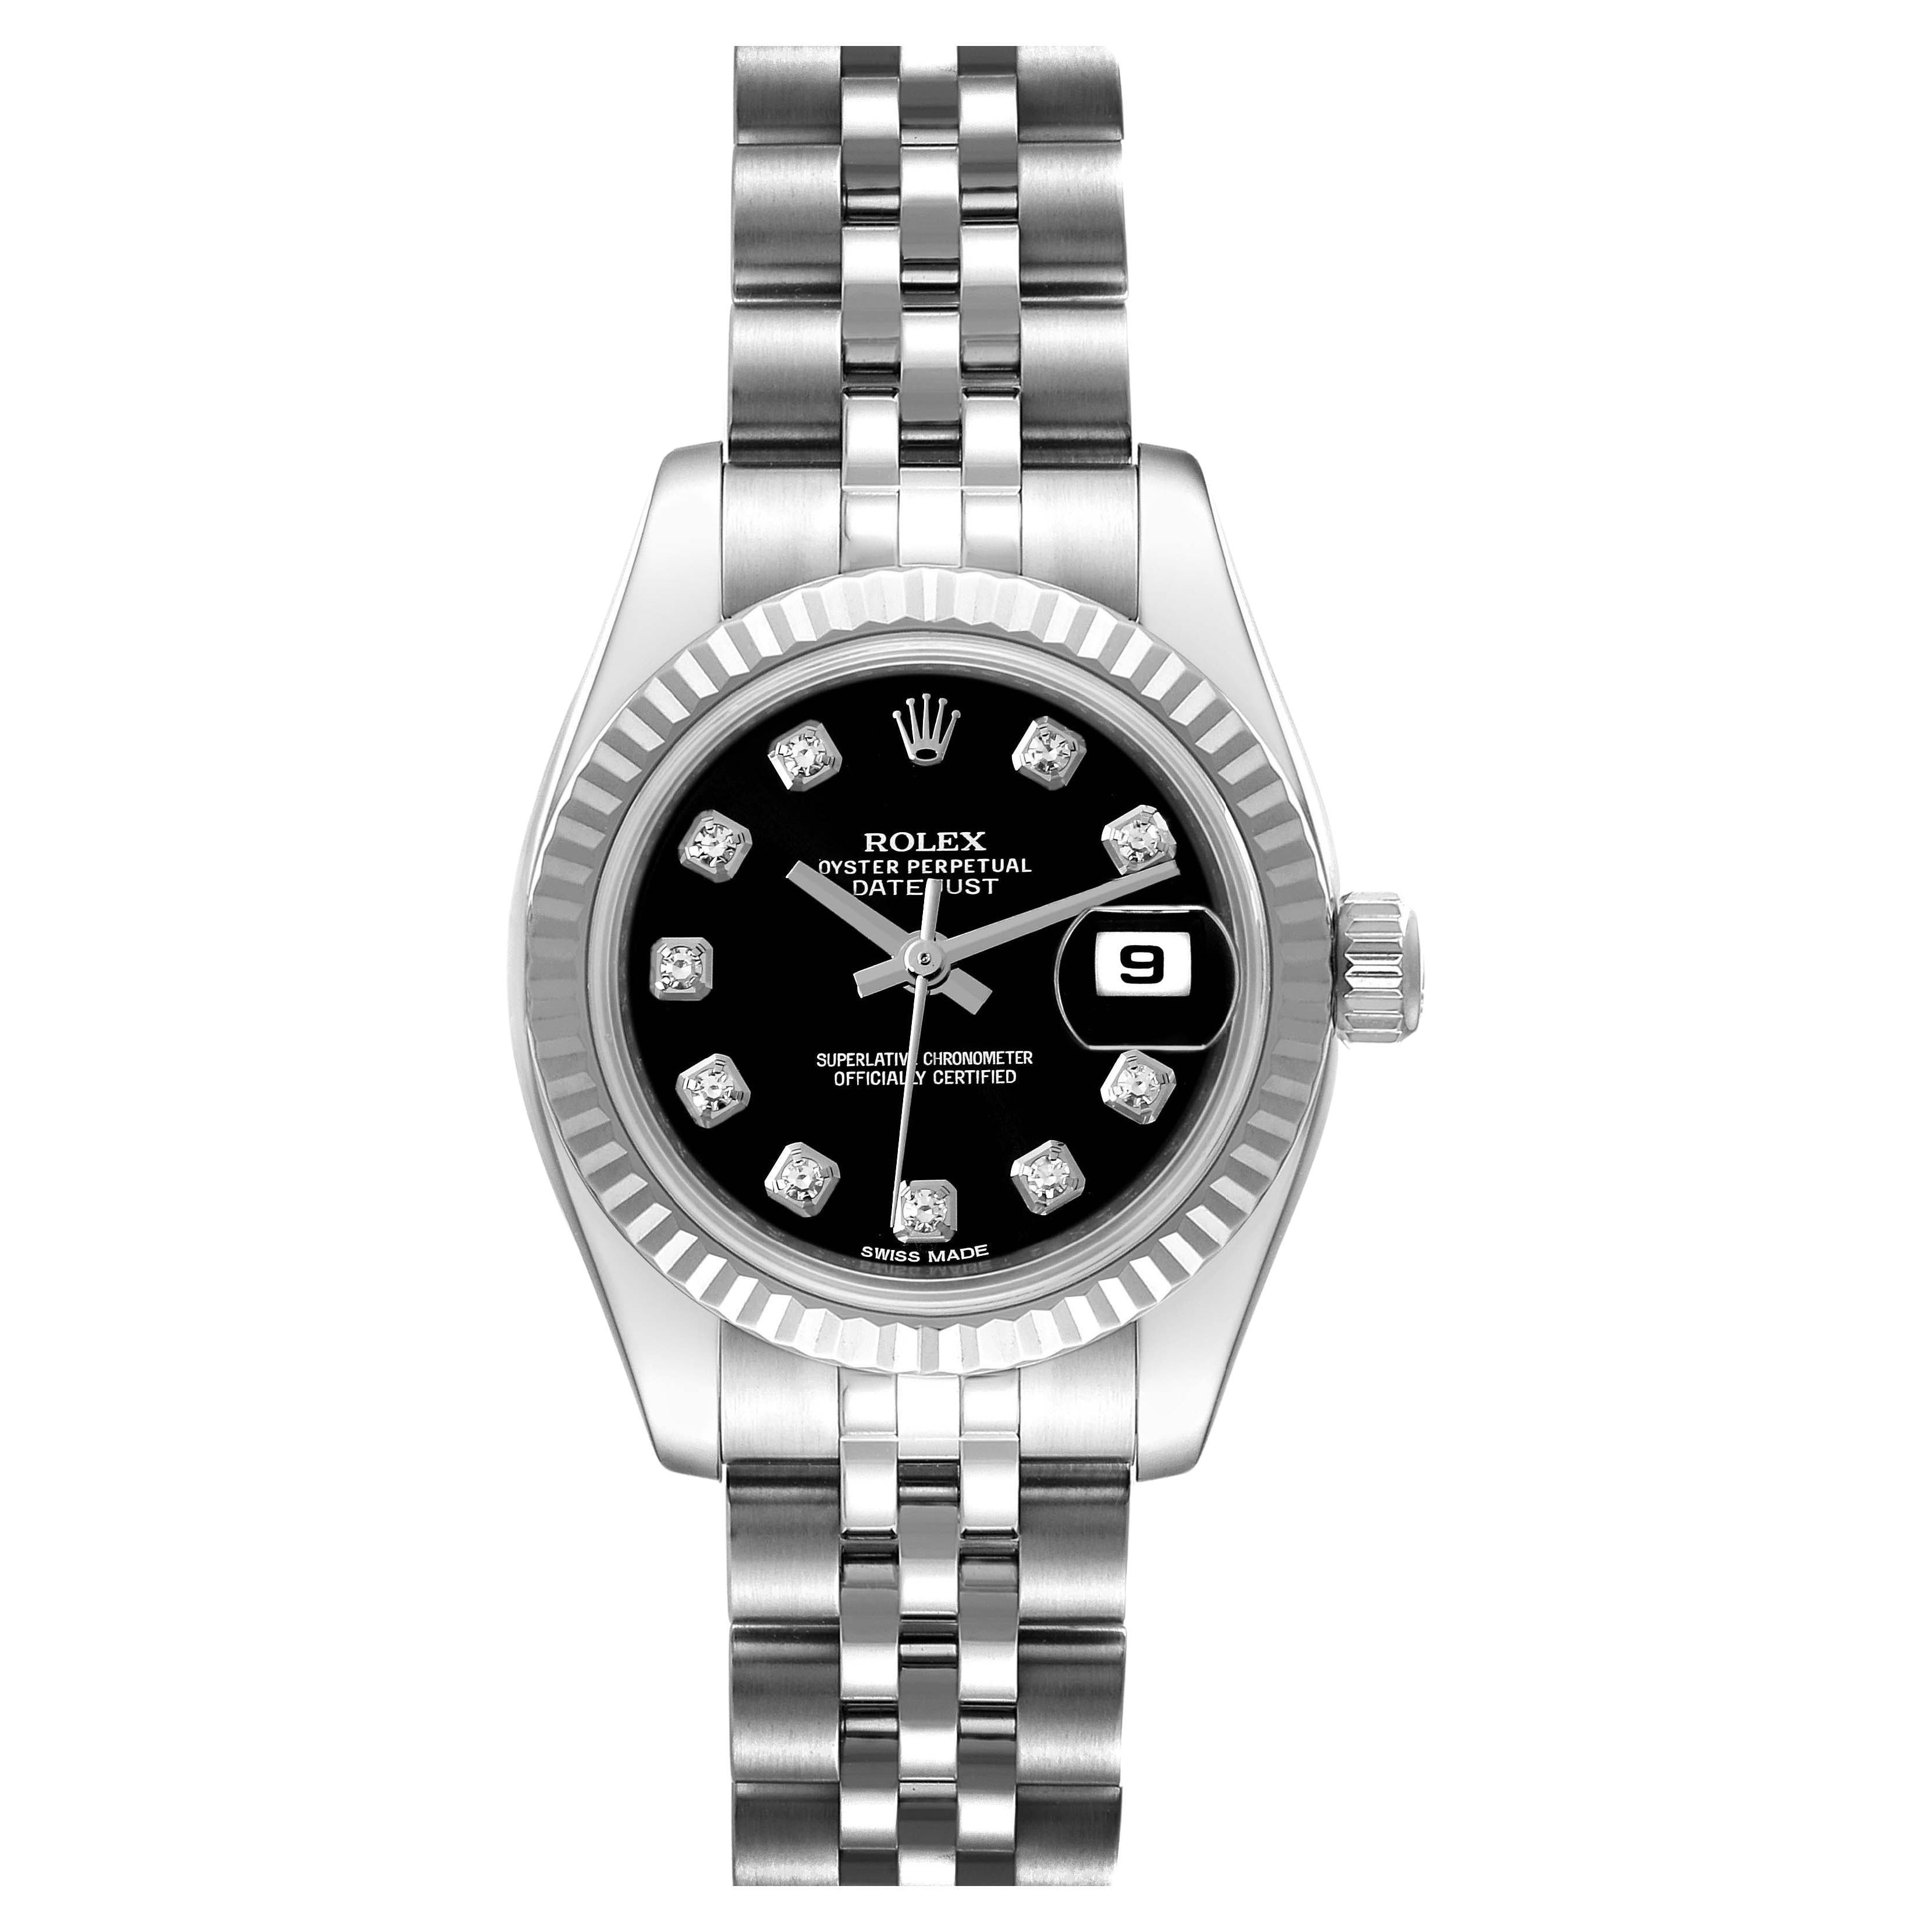 Rolex Datejust White Gold Black Diamond Dial Ladies Watch 179174 Box Card